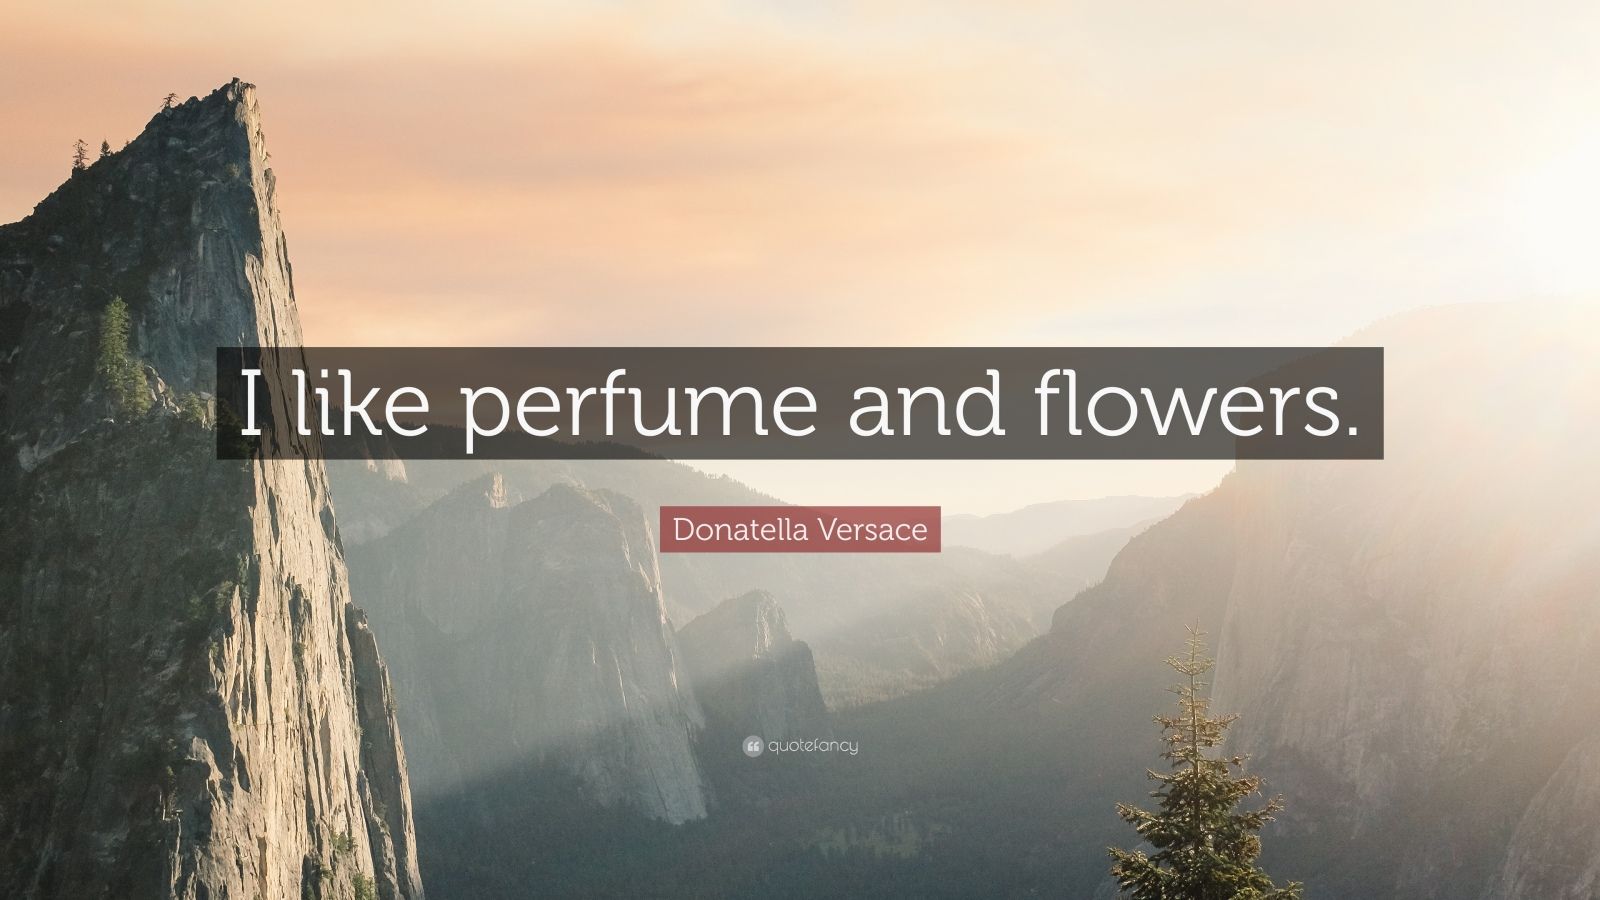 Donatella Versace quote: I like perfume and flowers.